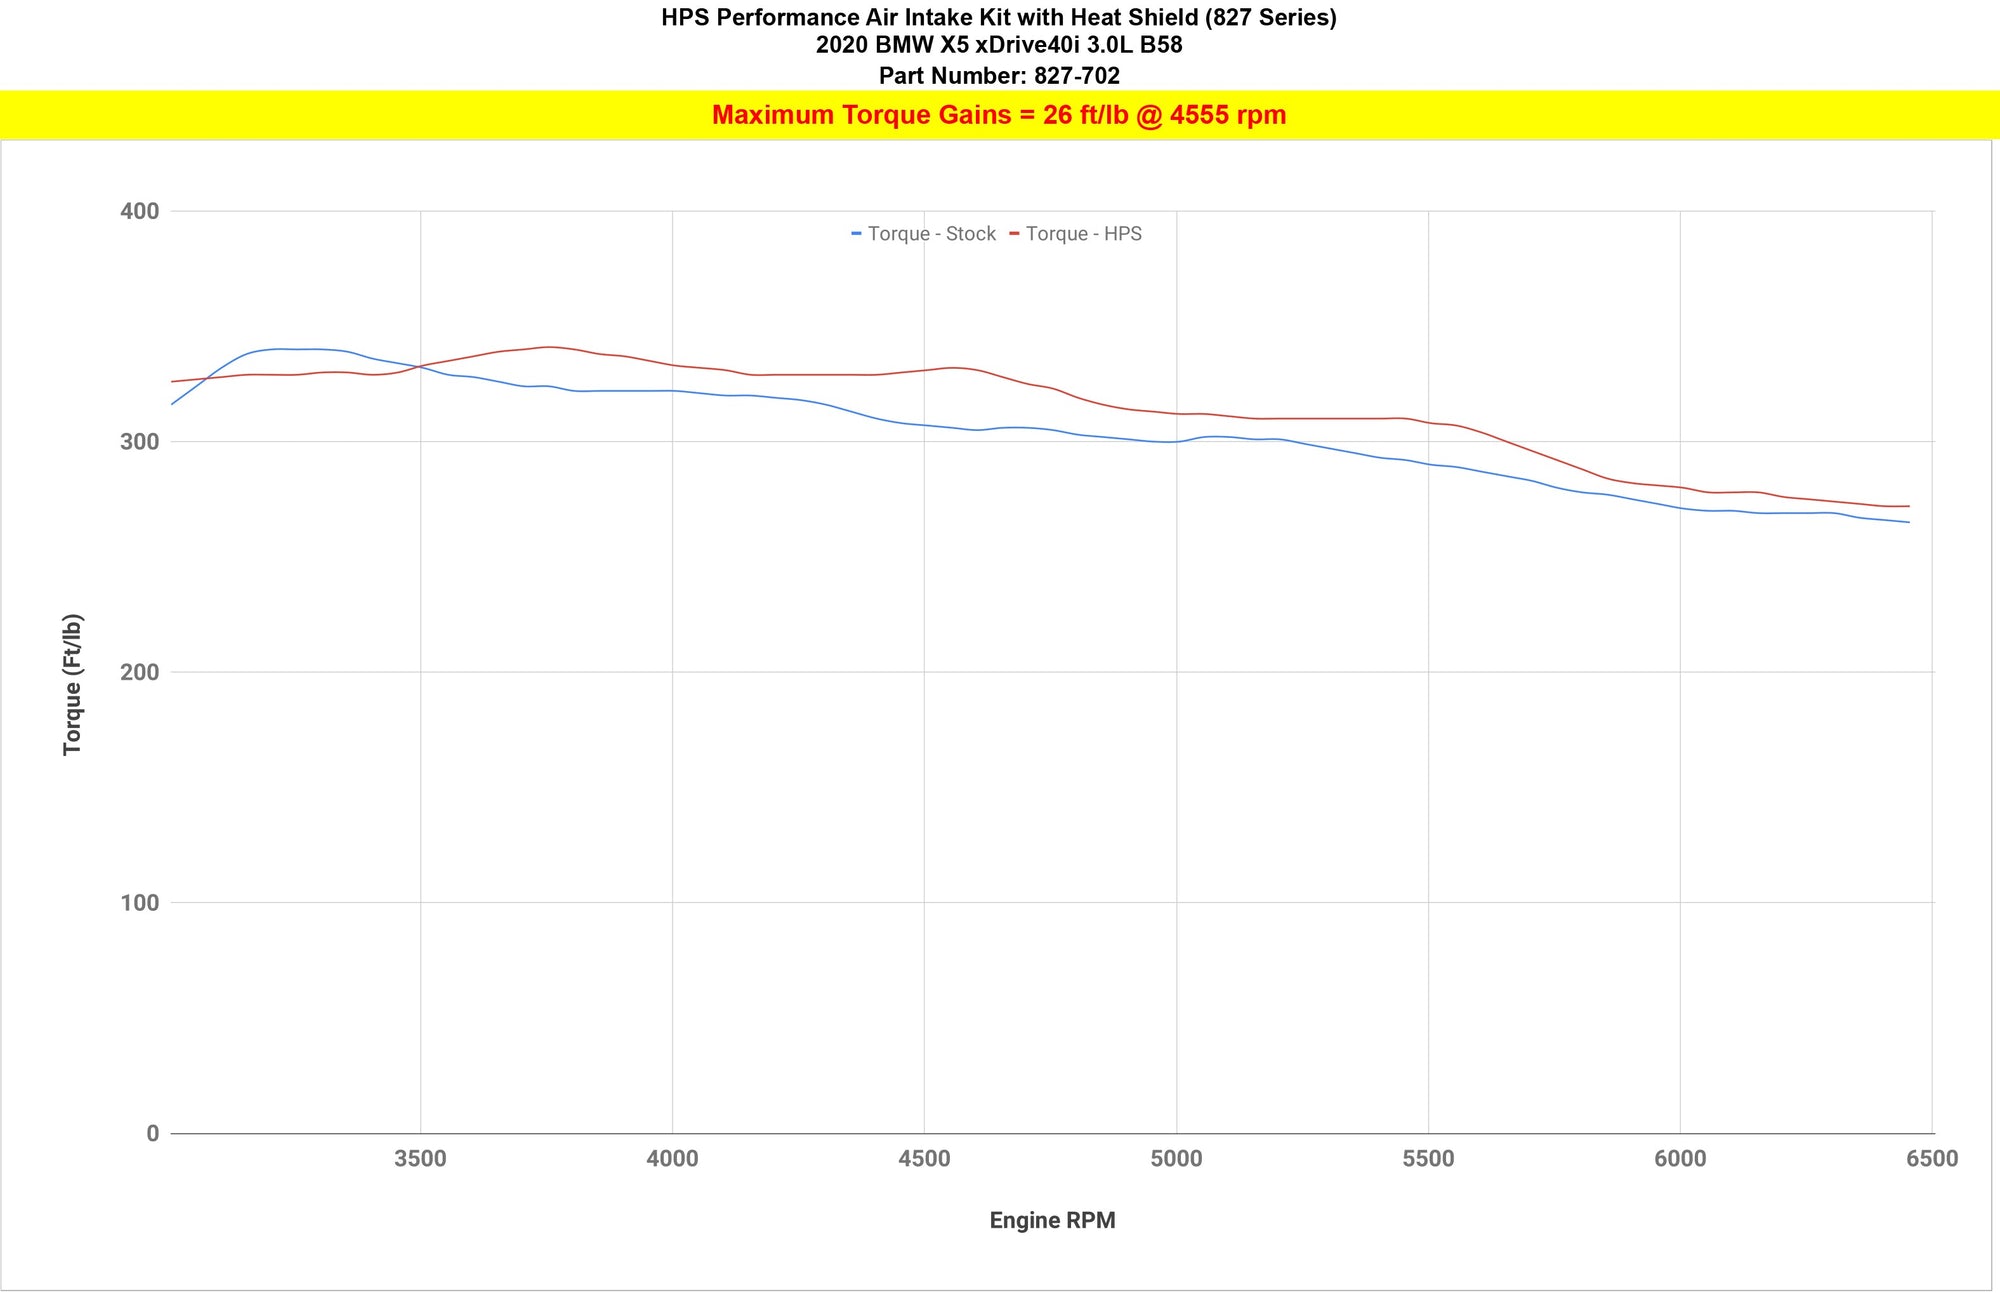 HPS Cold Air Intake Kit 827-702 increase torque 26 ft/lb BMW X5 3.0L Turbo B58 G05